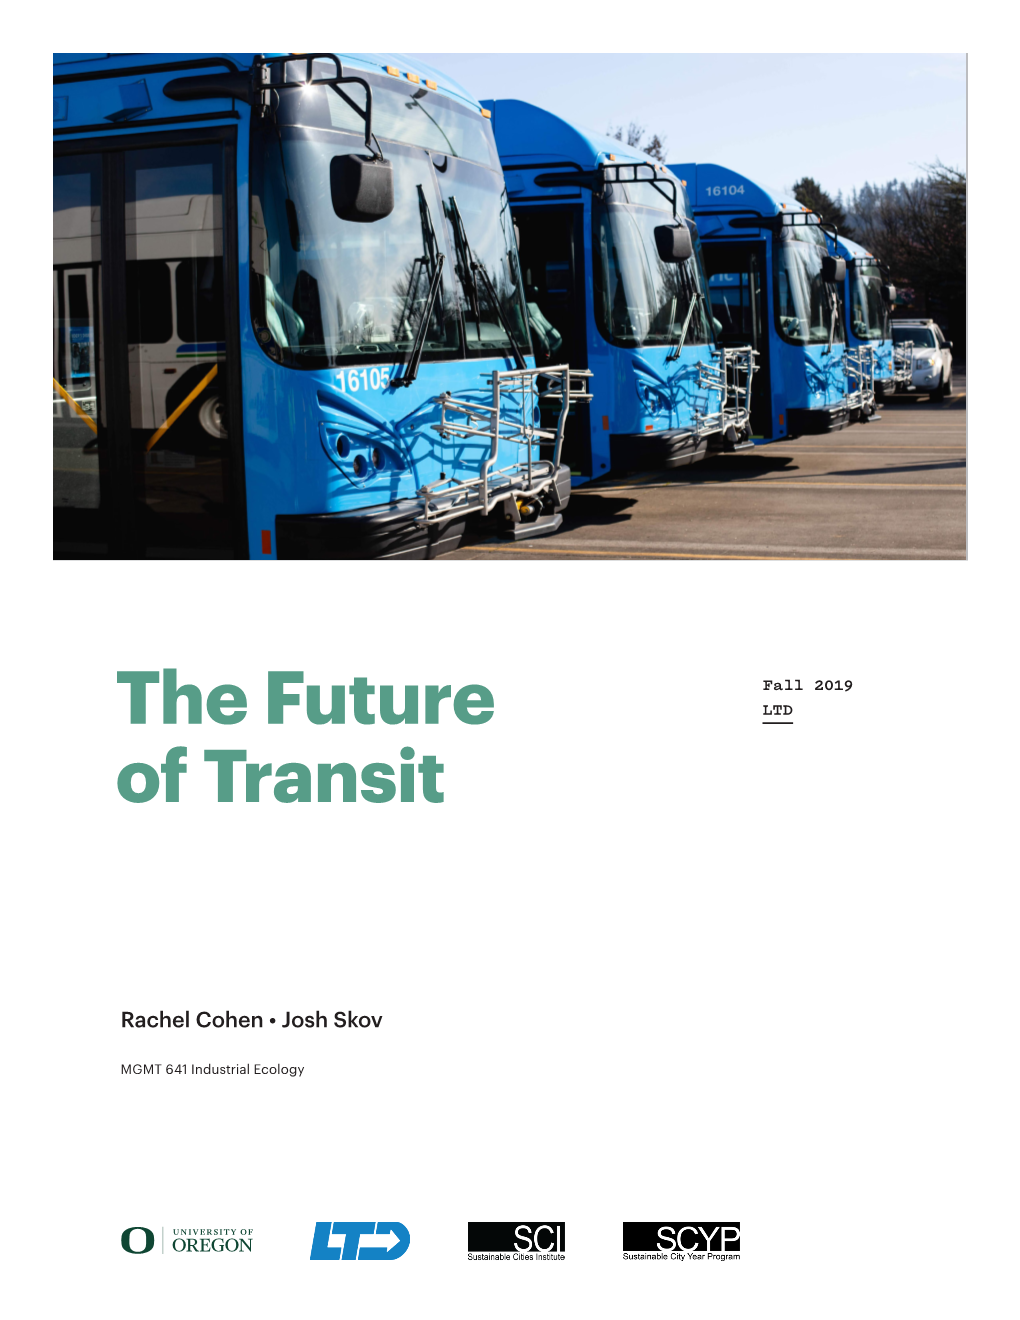 The Future of Transit